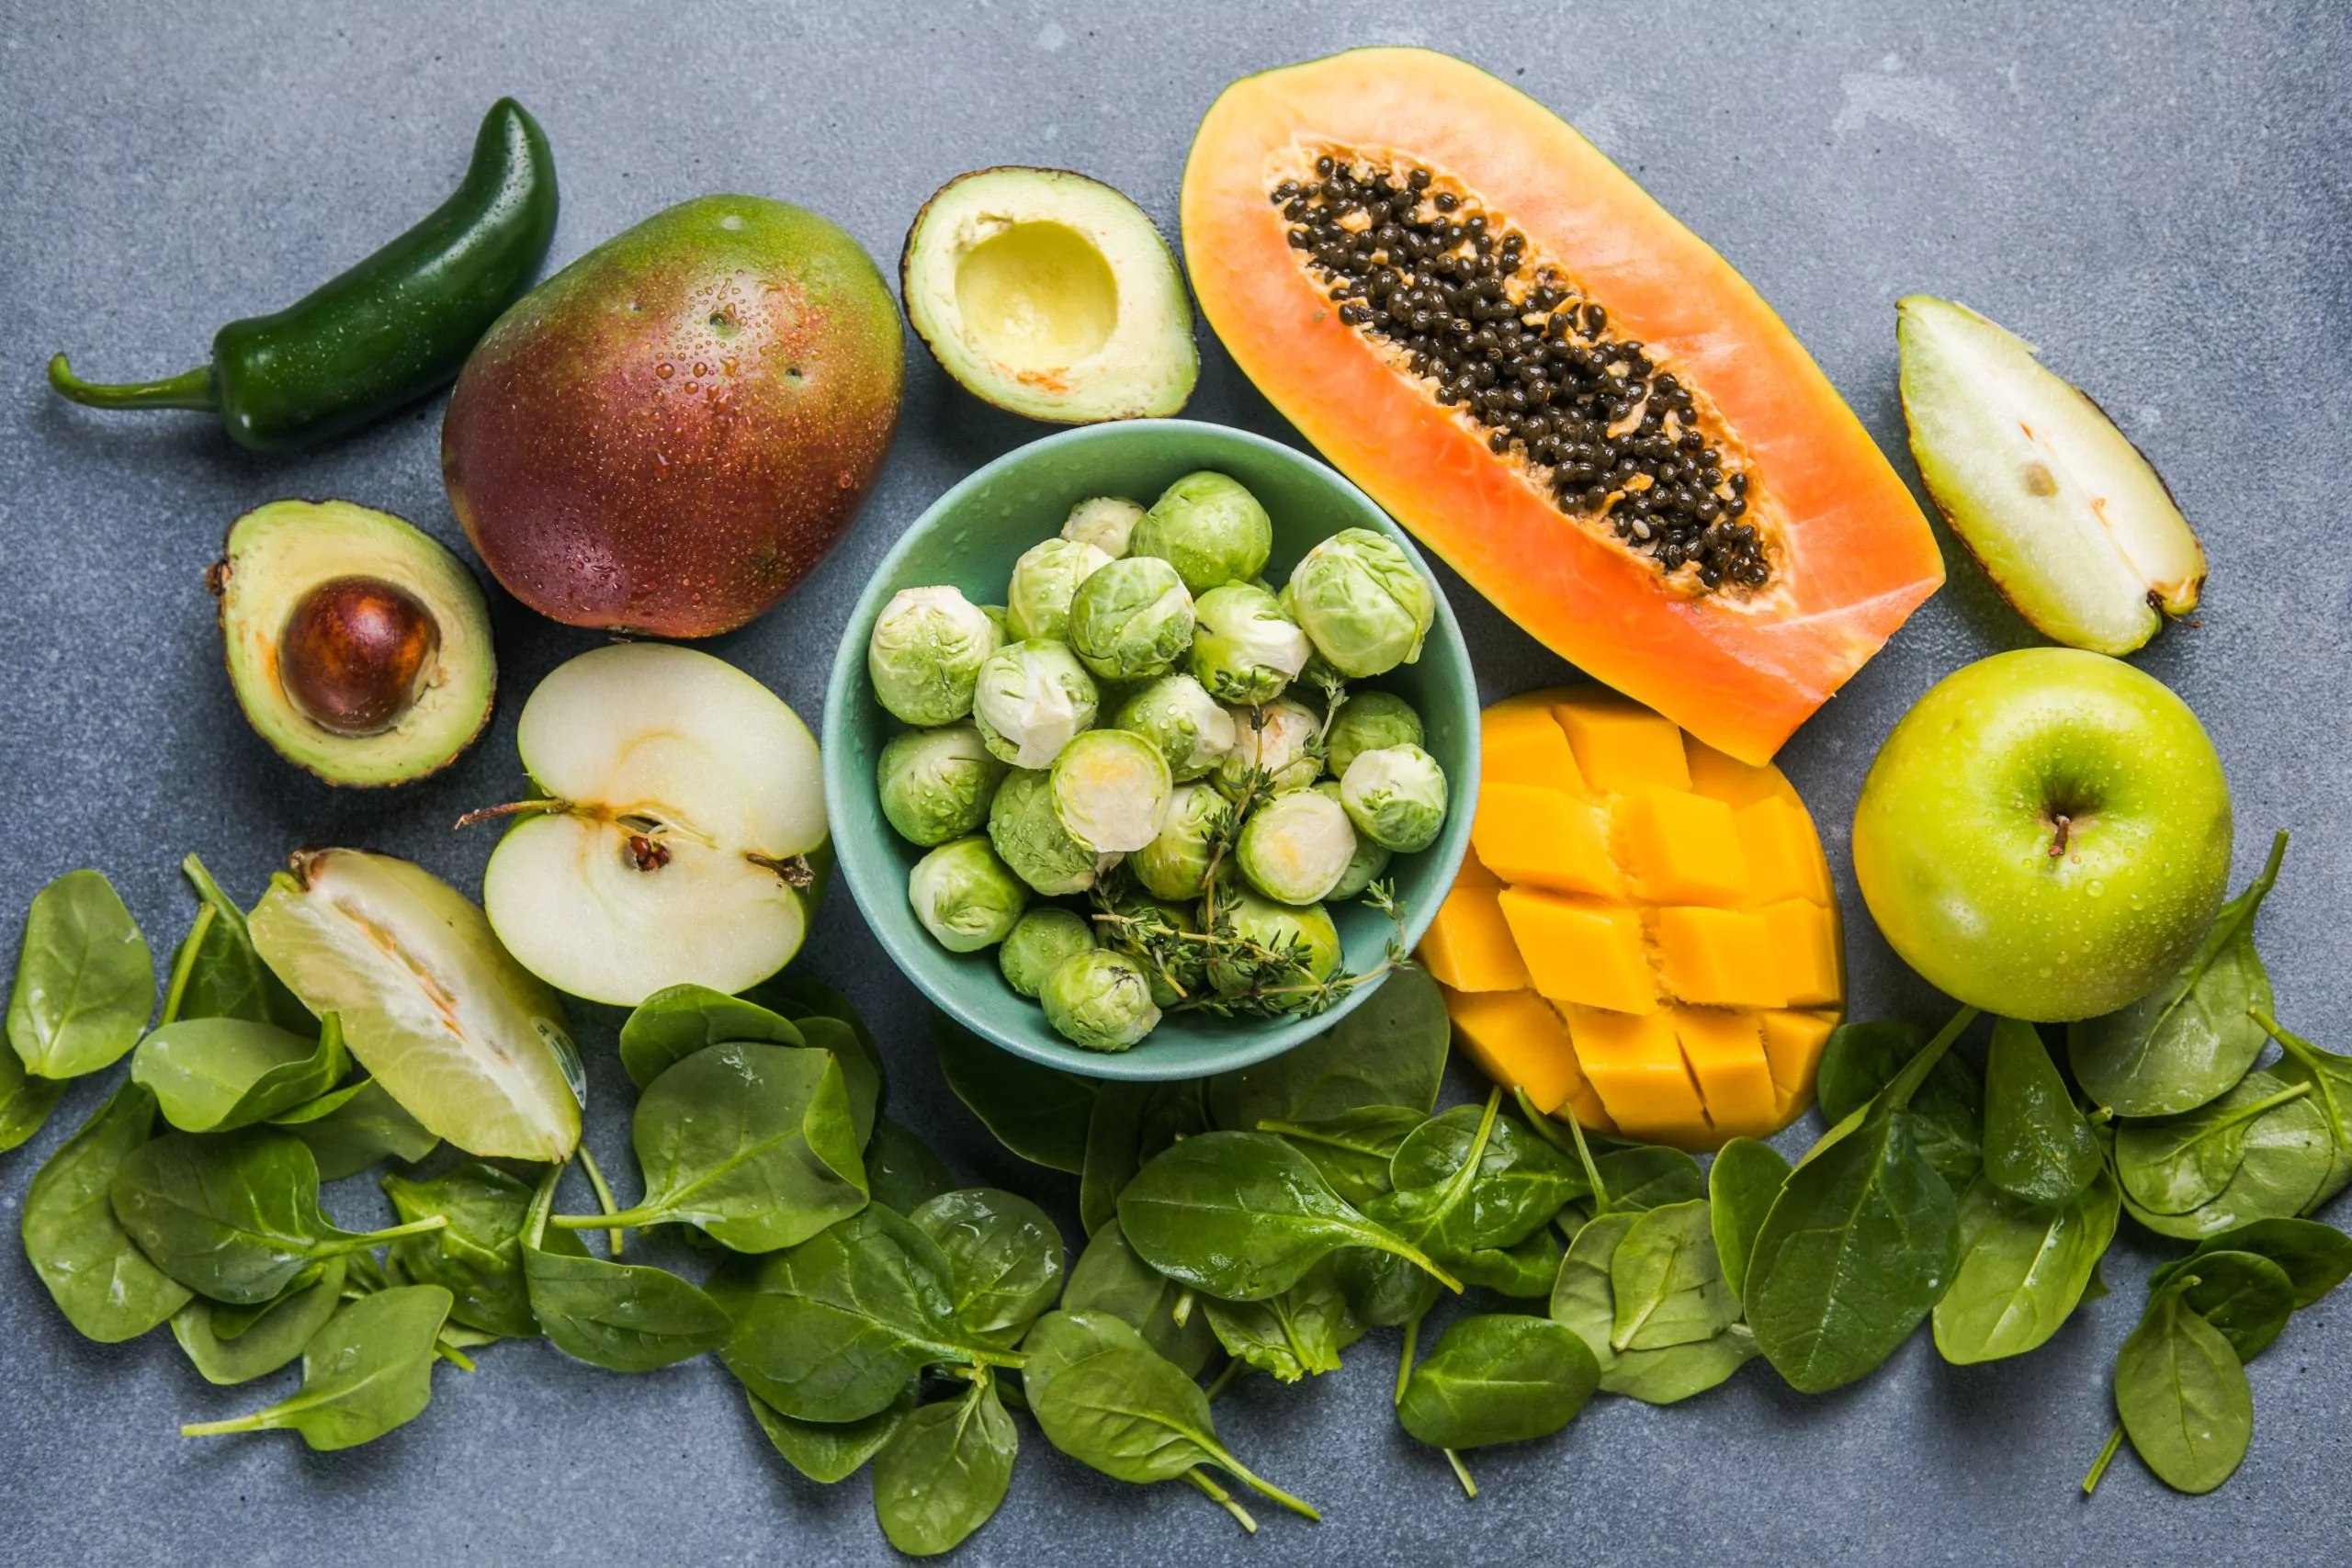 Foods high in folic acid. Vegetables, fruits rich in vitamin C